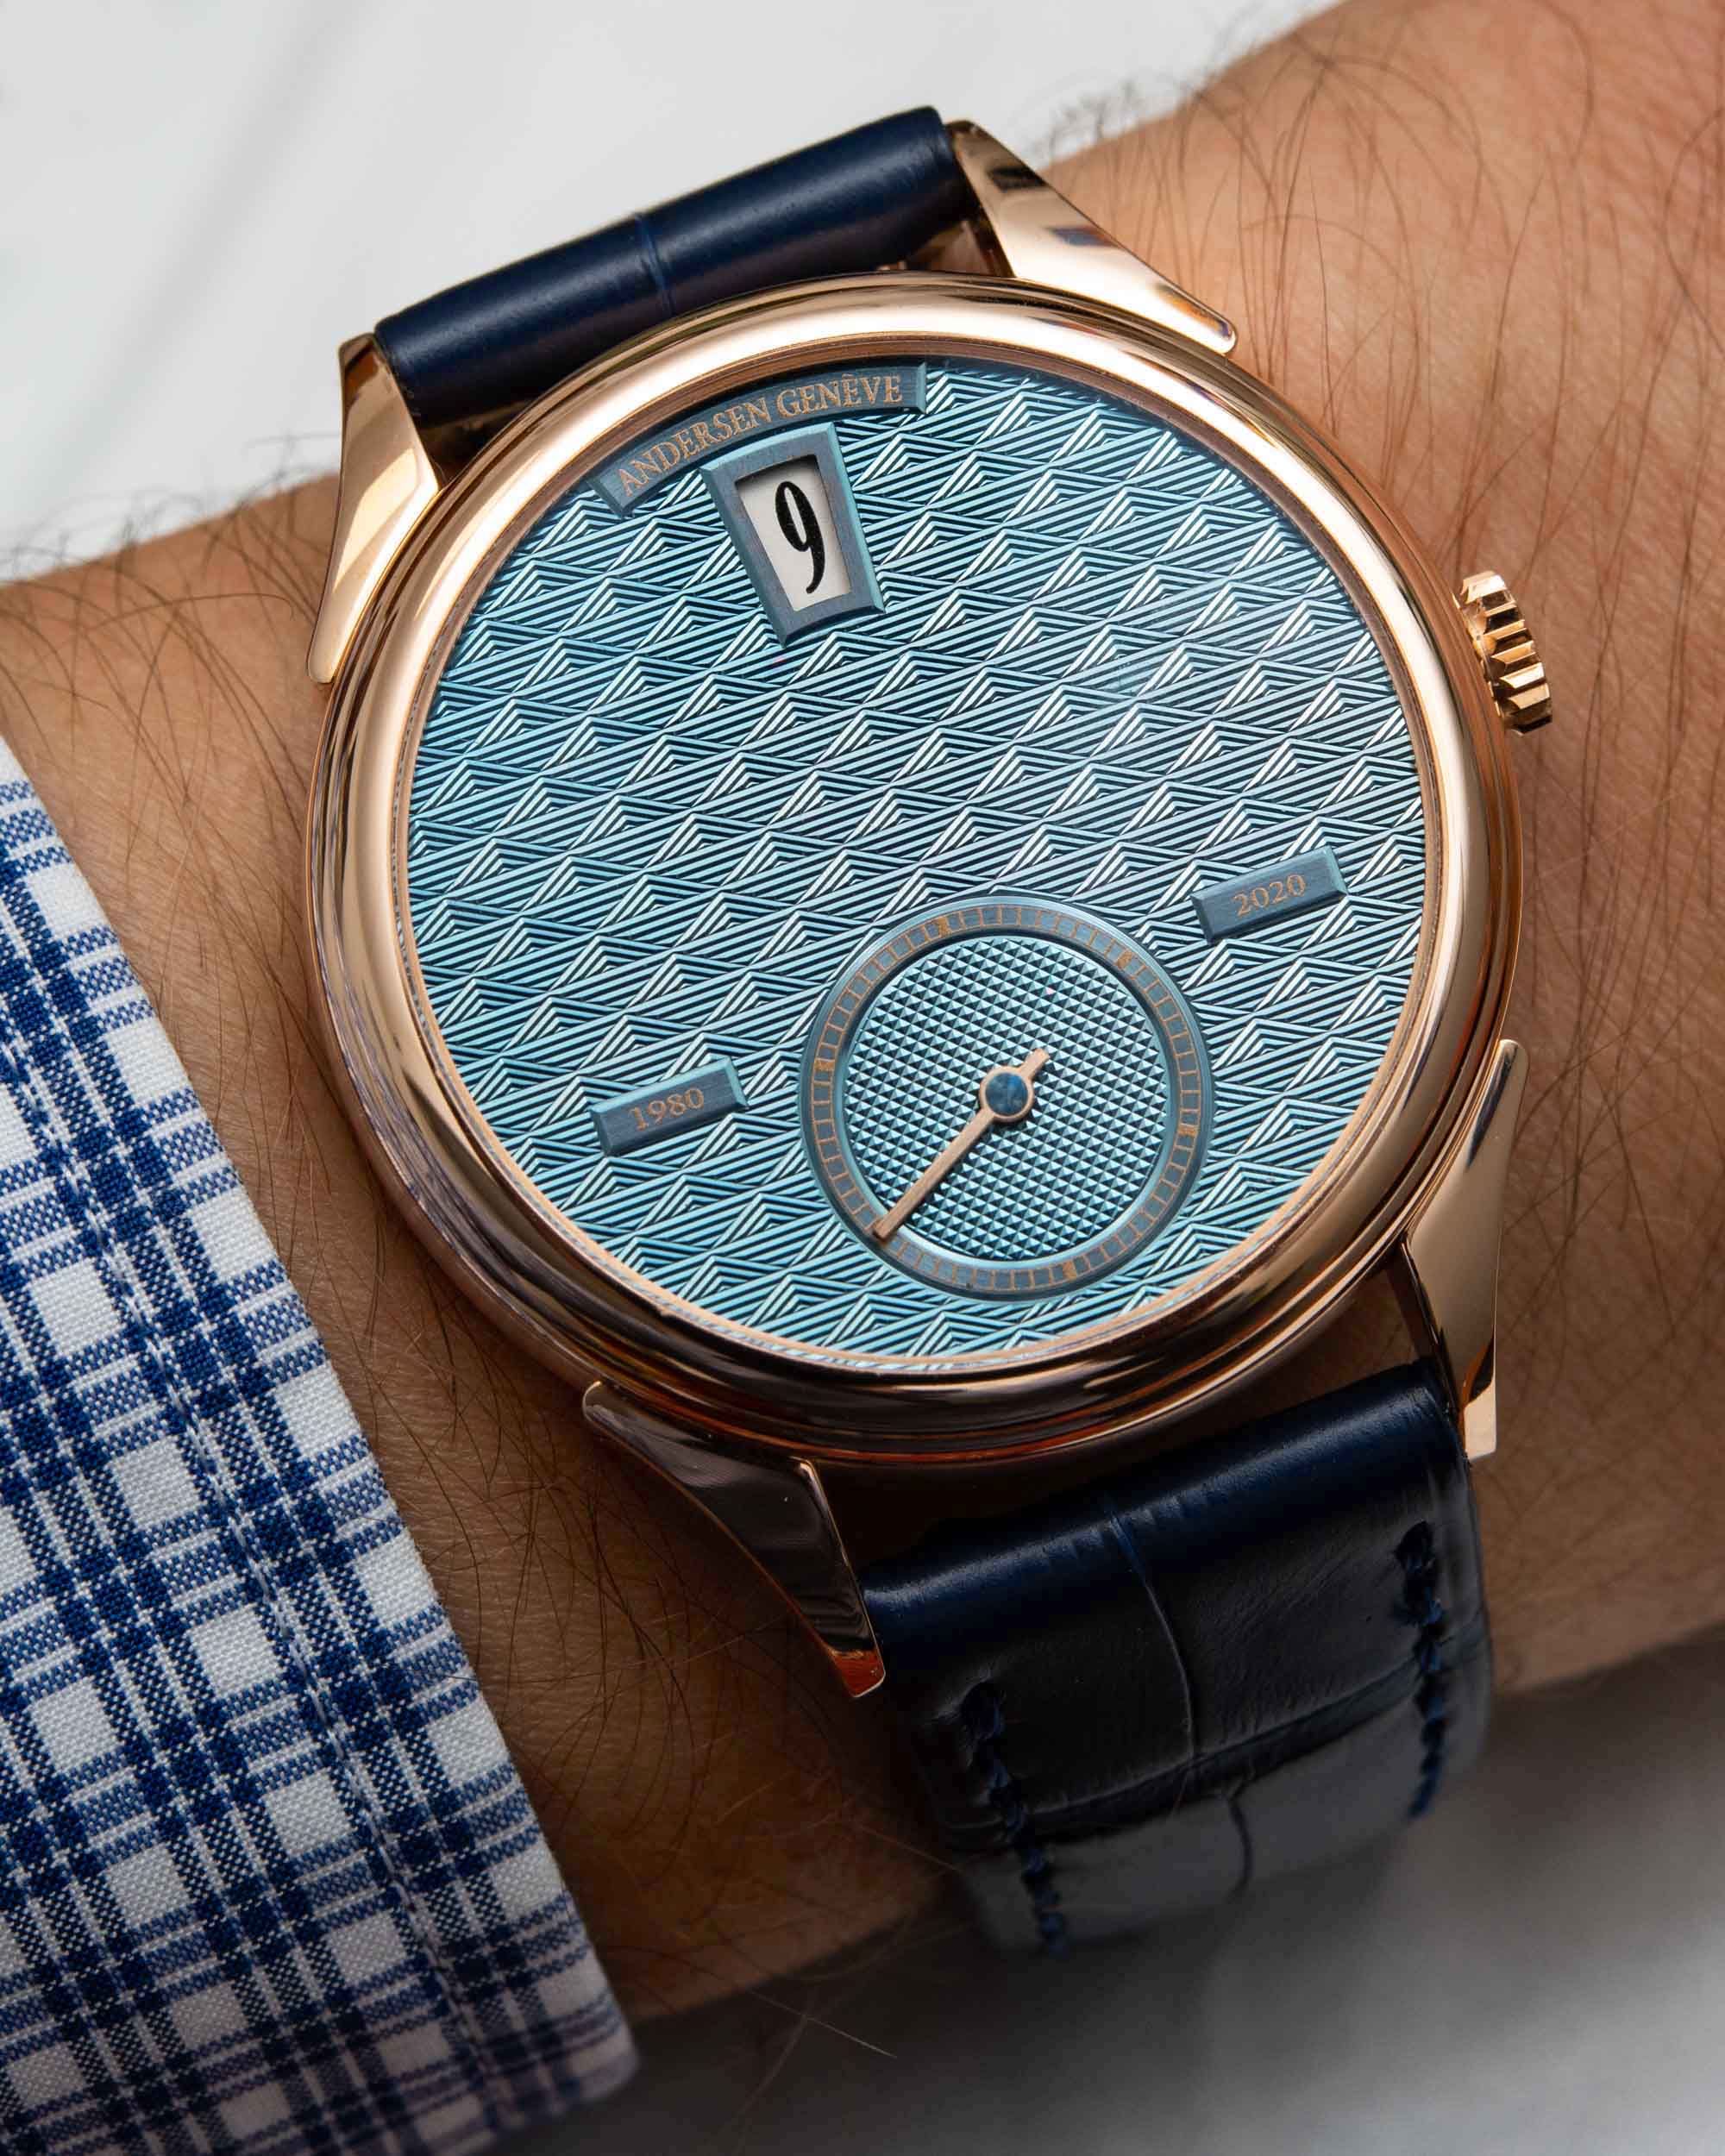 Andersen Geneve手表-40周年纪念款